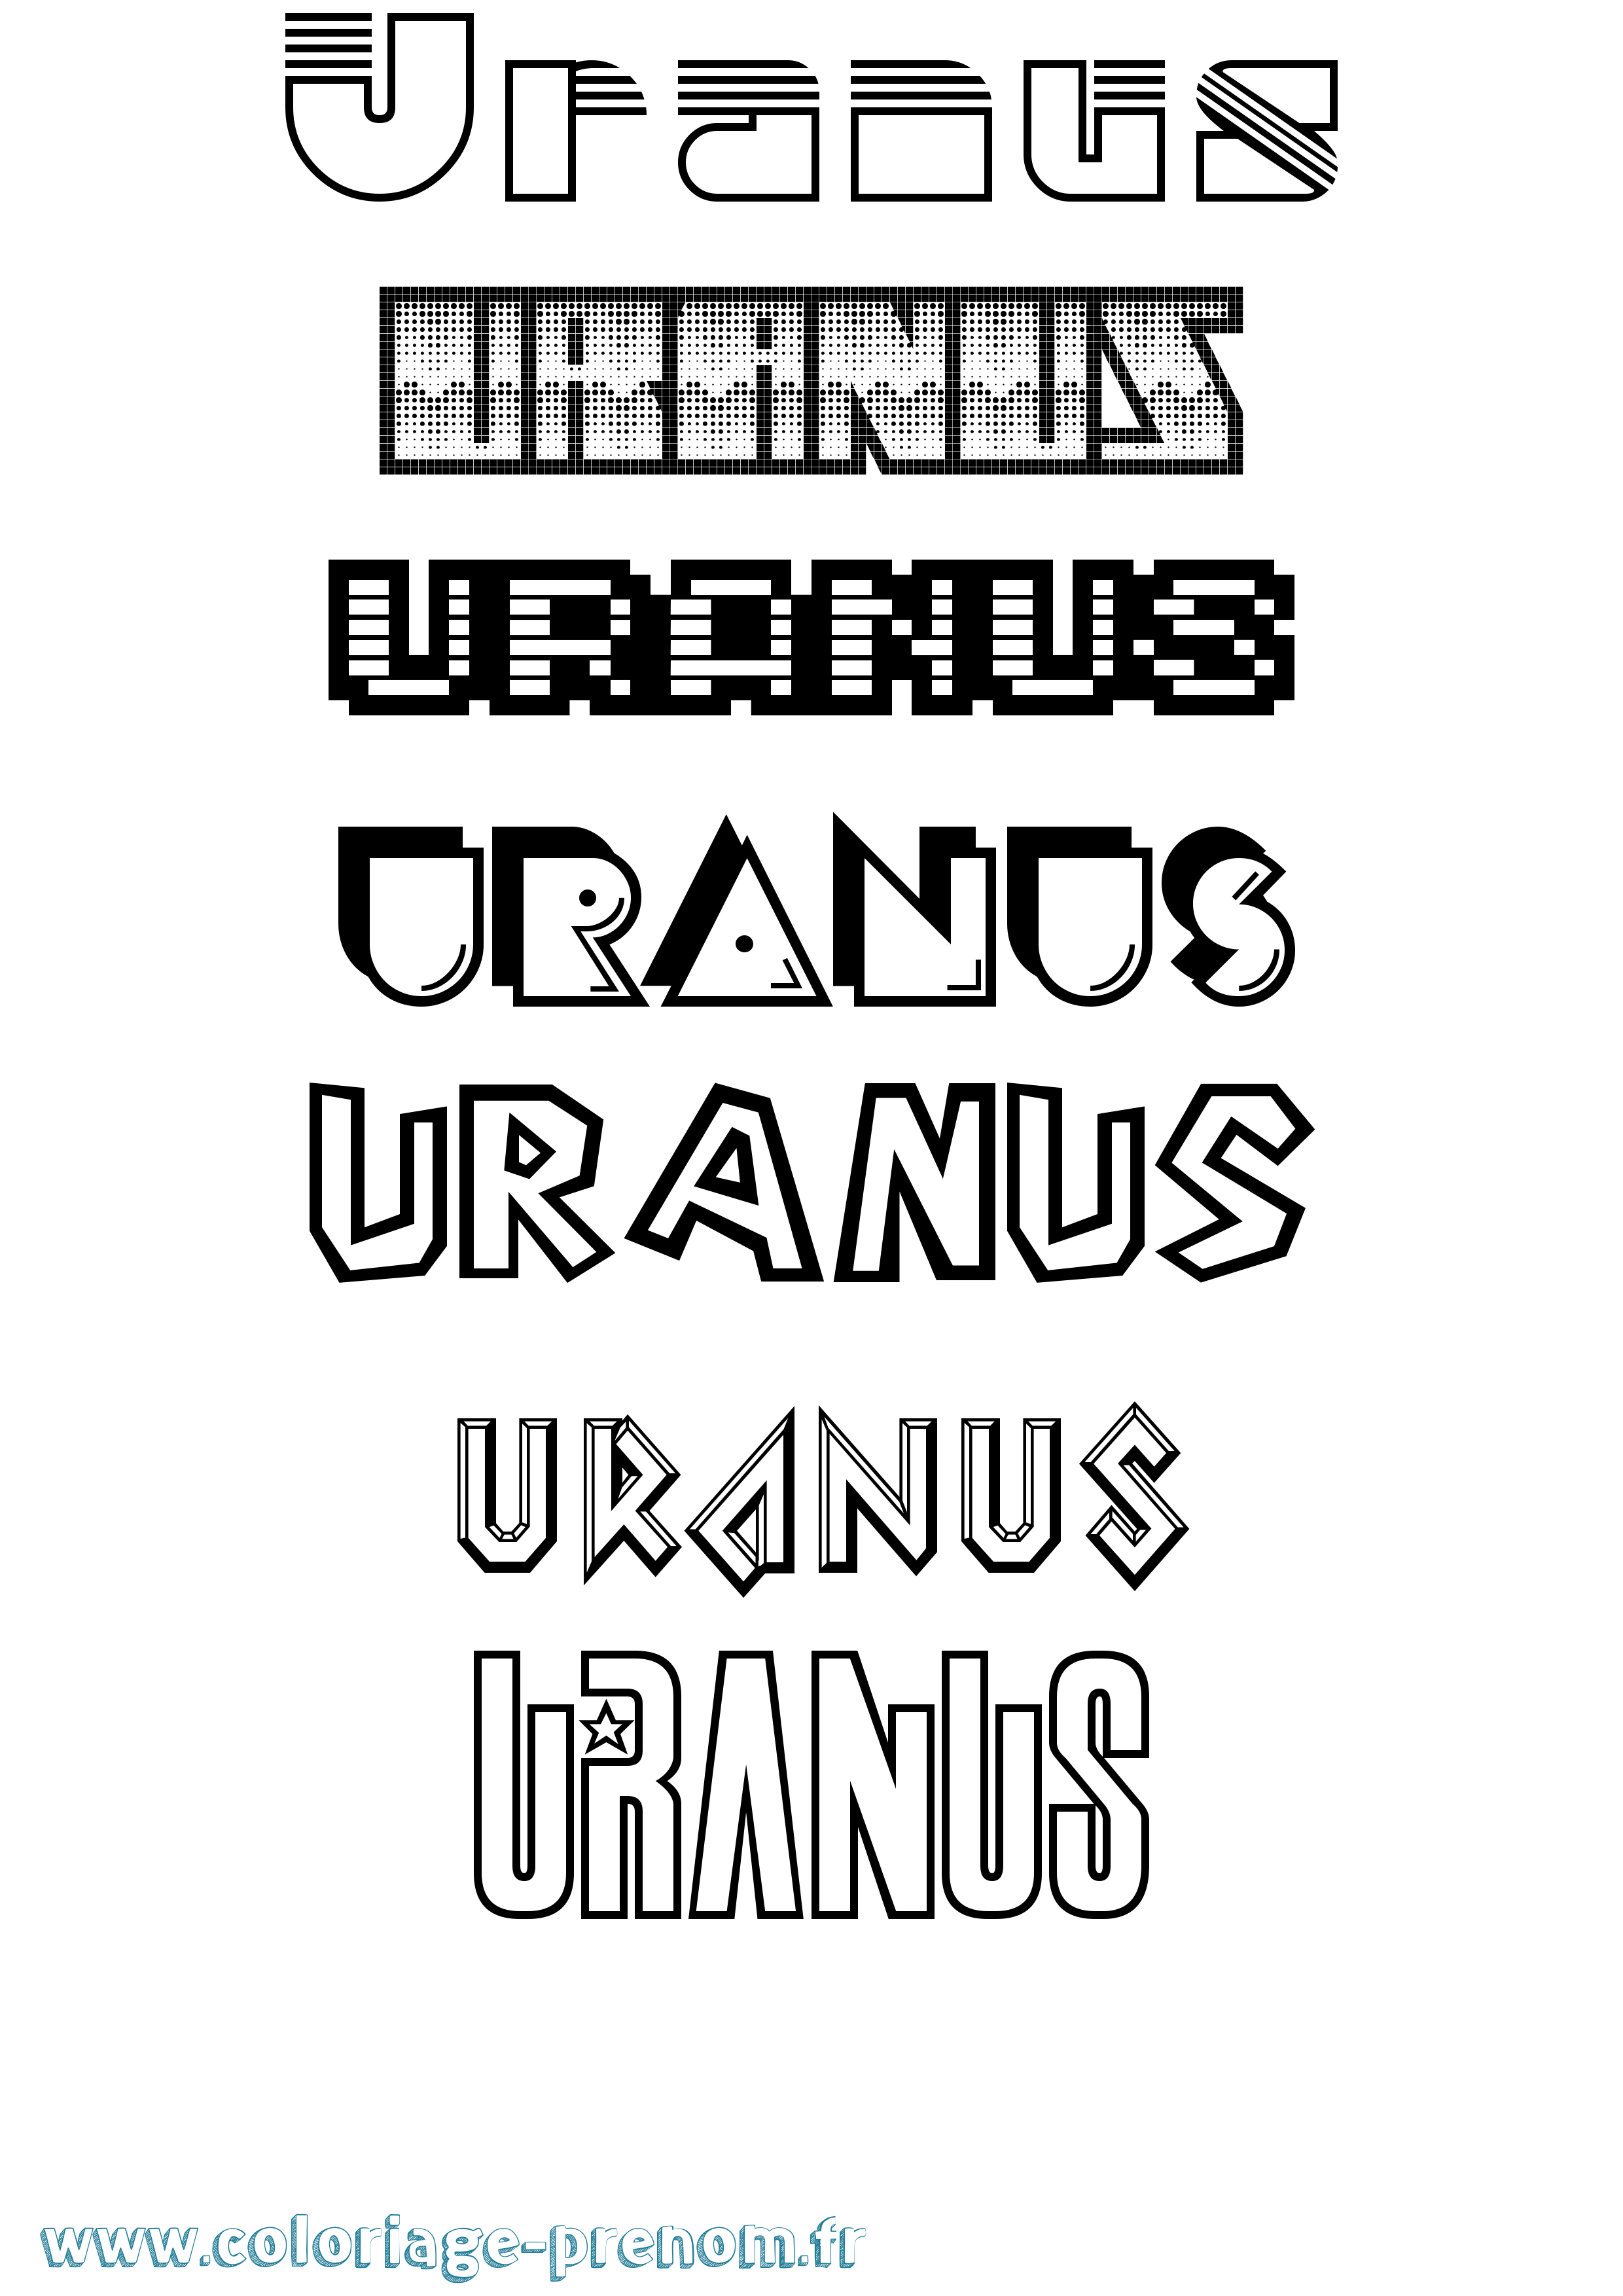 Coloriage prénom Uranus